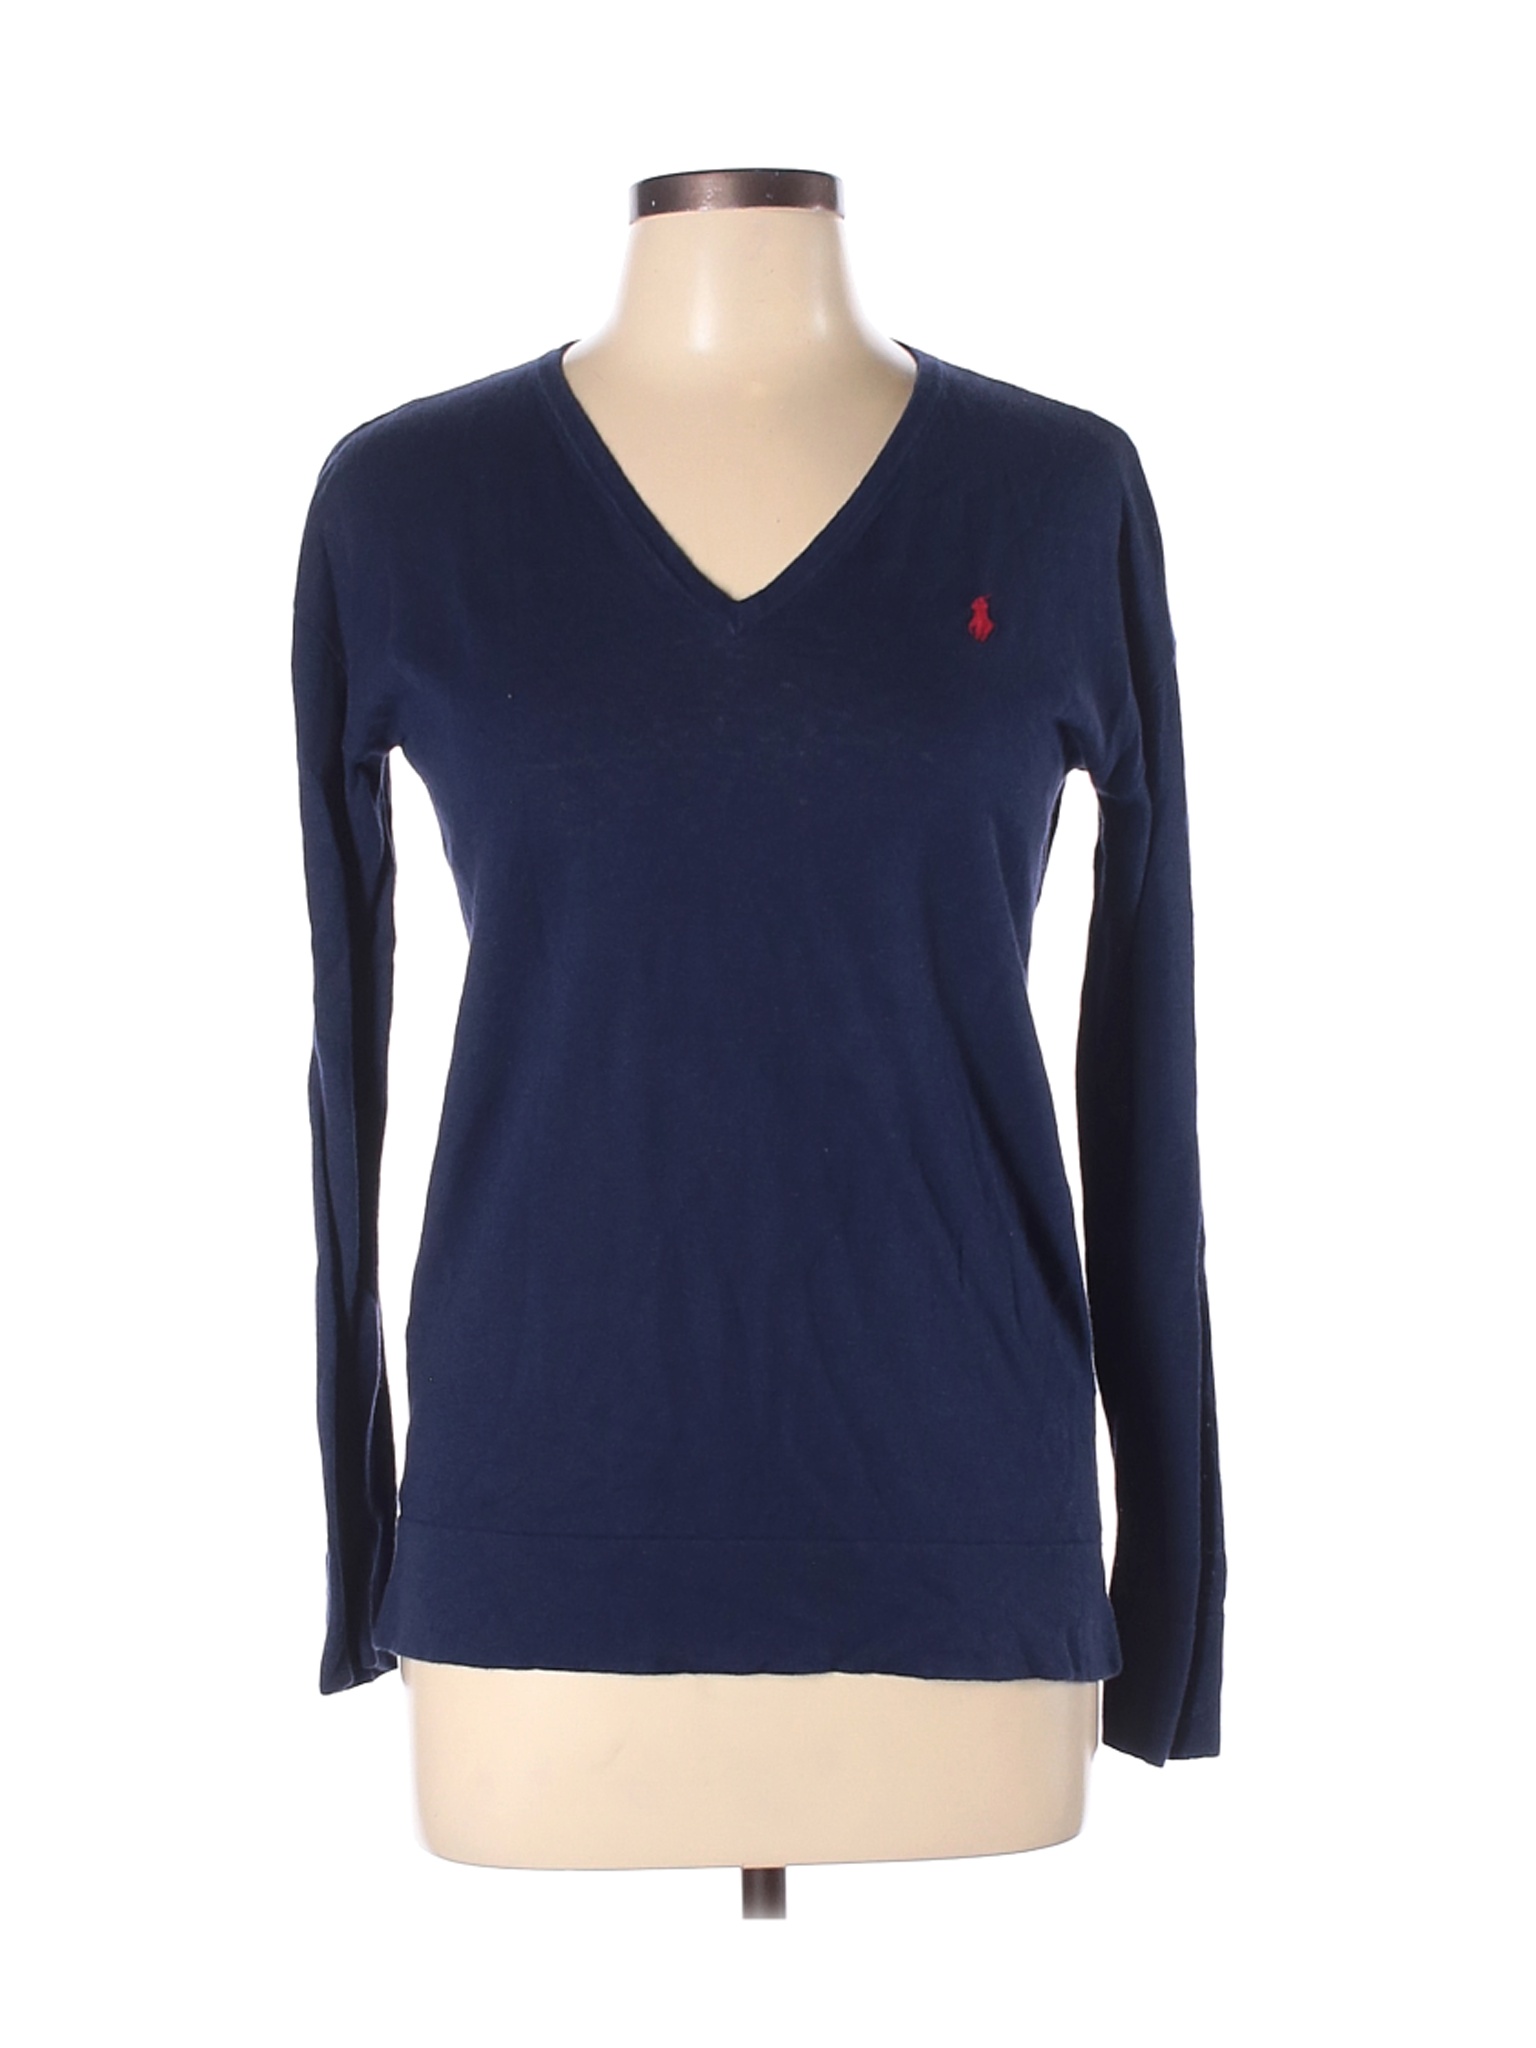 Polo by Ralph Lauren Women Blue Pullover Sweater L | eBay